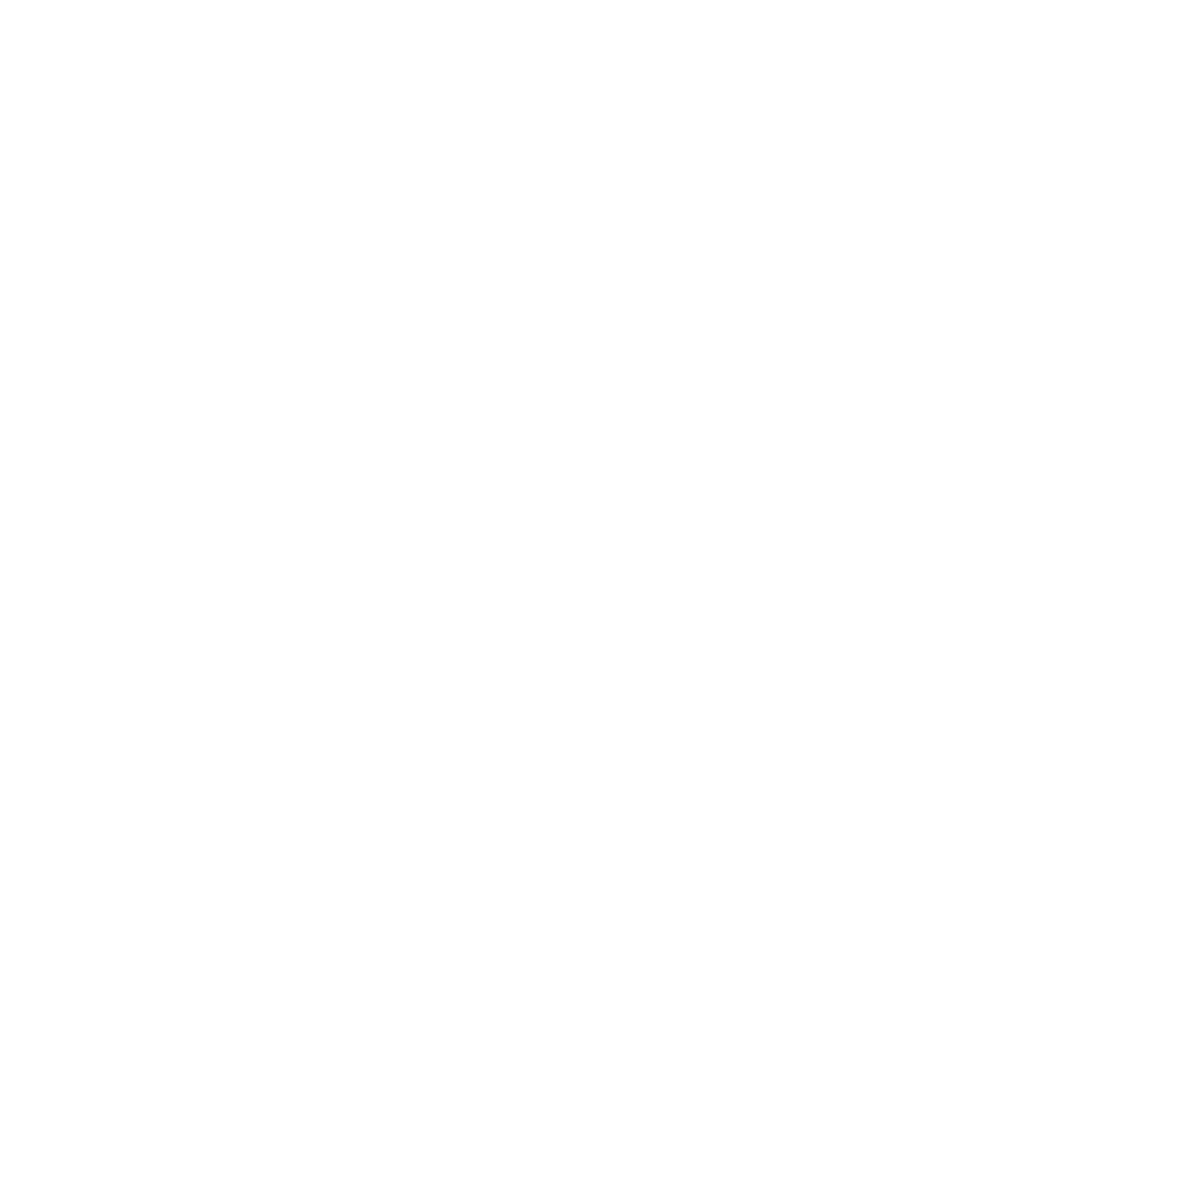 PyCharm Logo